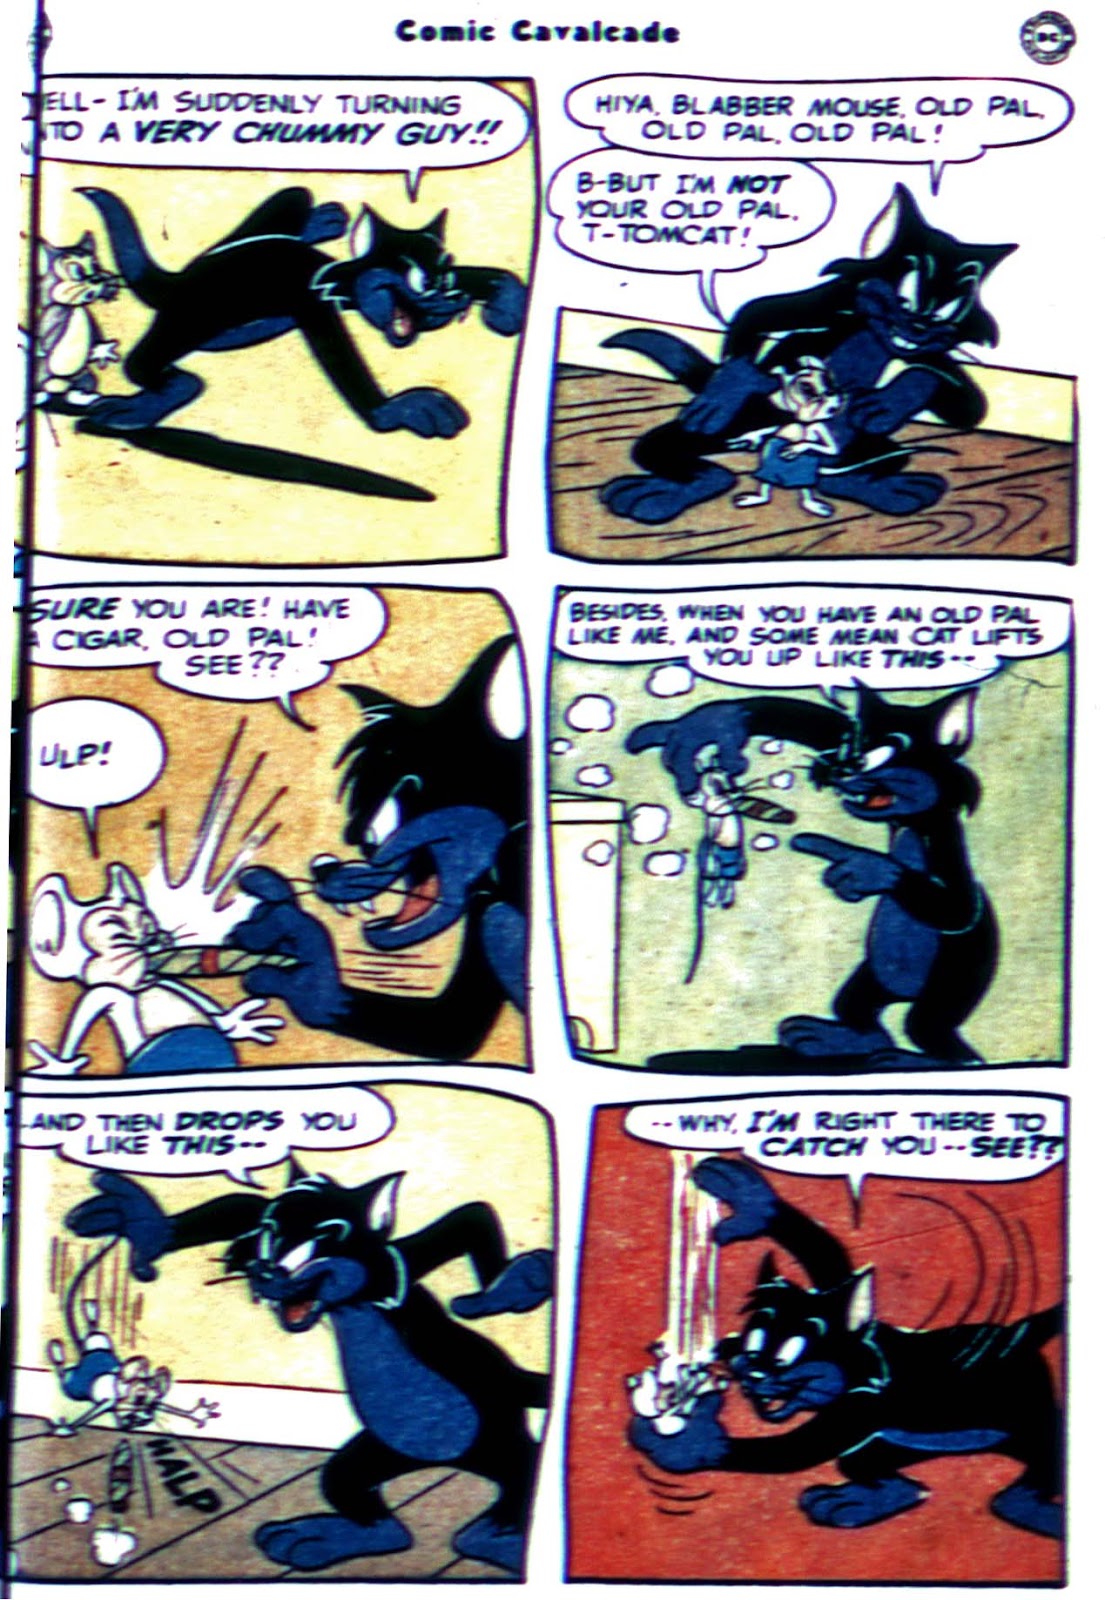 Comic Cavalcade issue 30 - Page 15